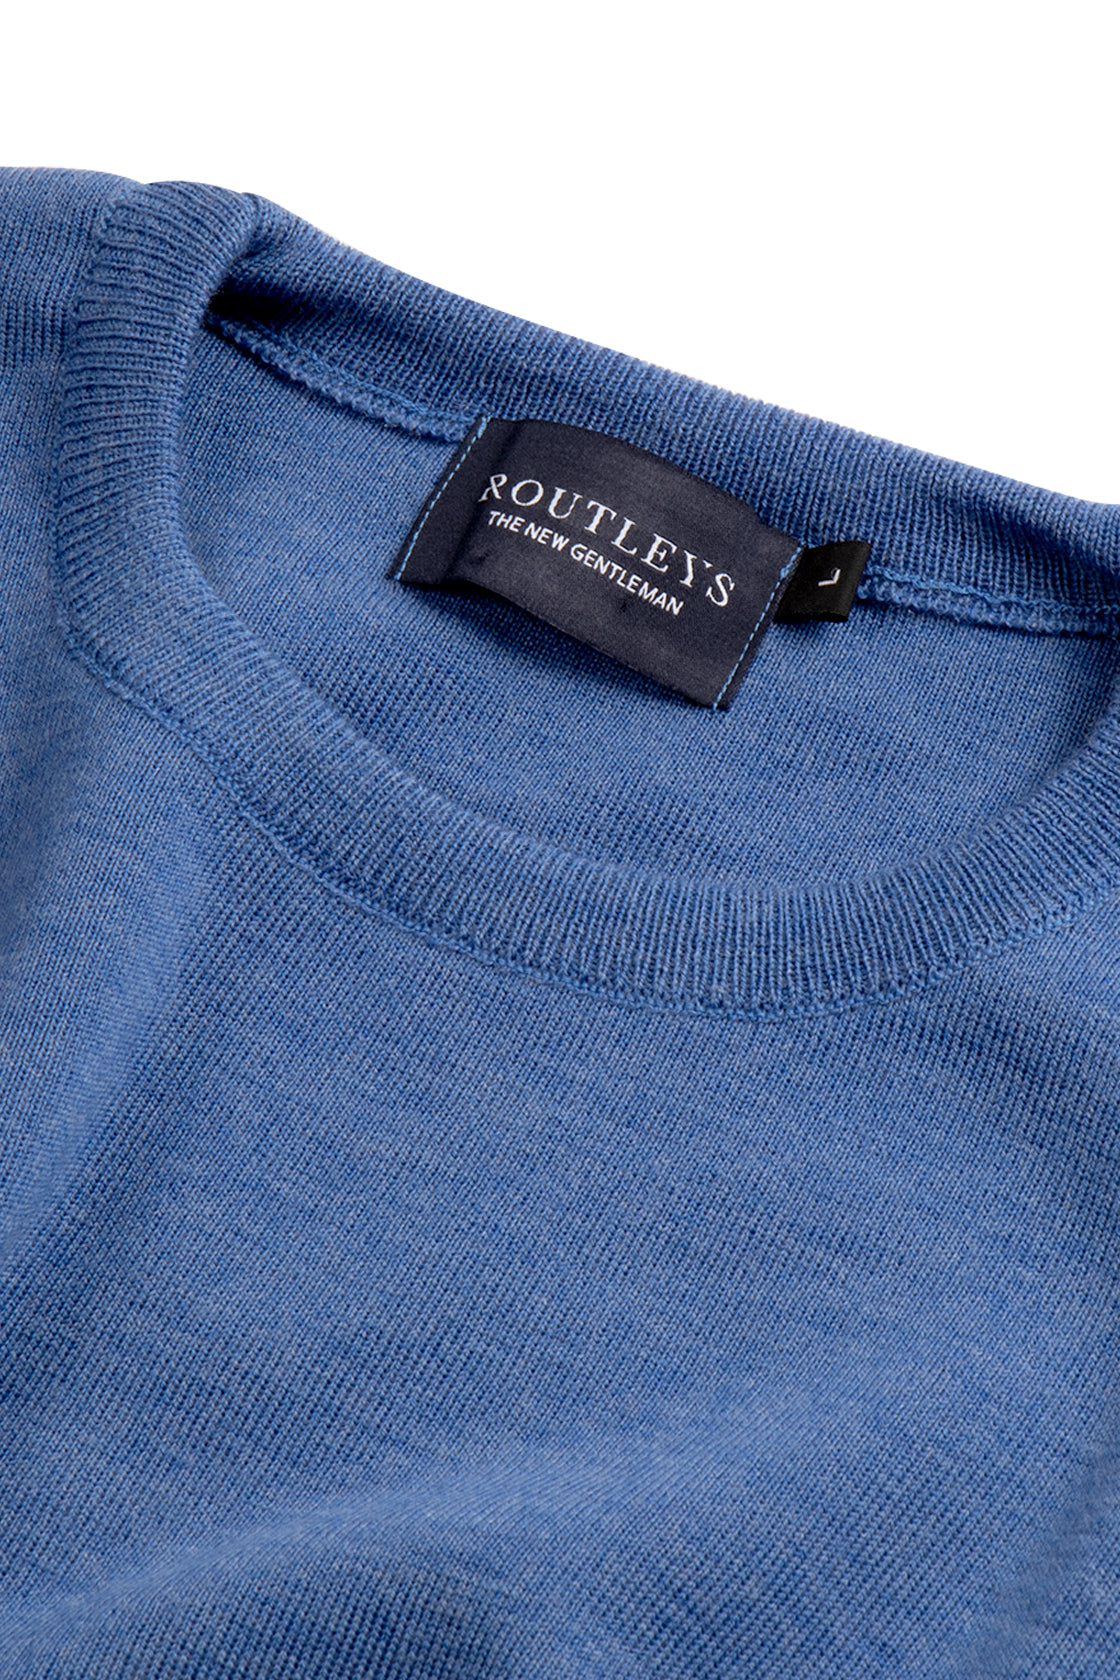 Routleys Merino Crew Neck Sweater Light Blue